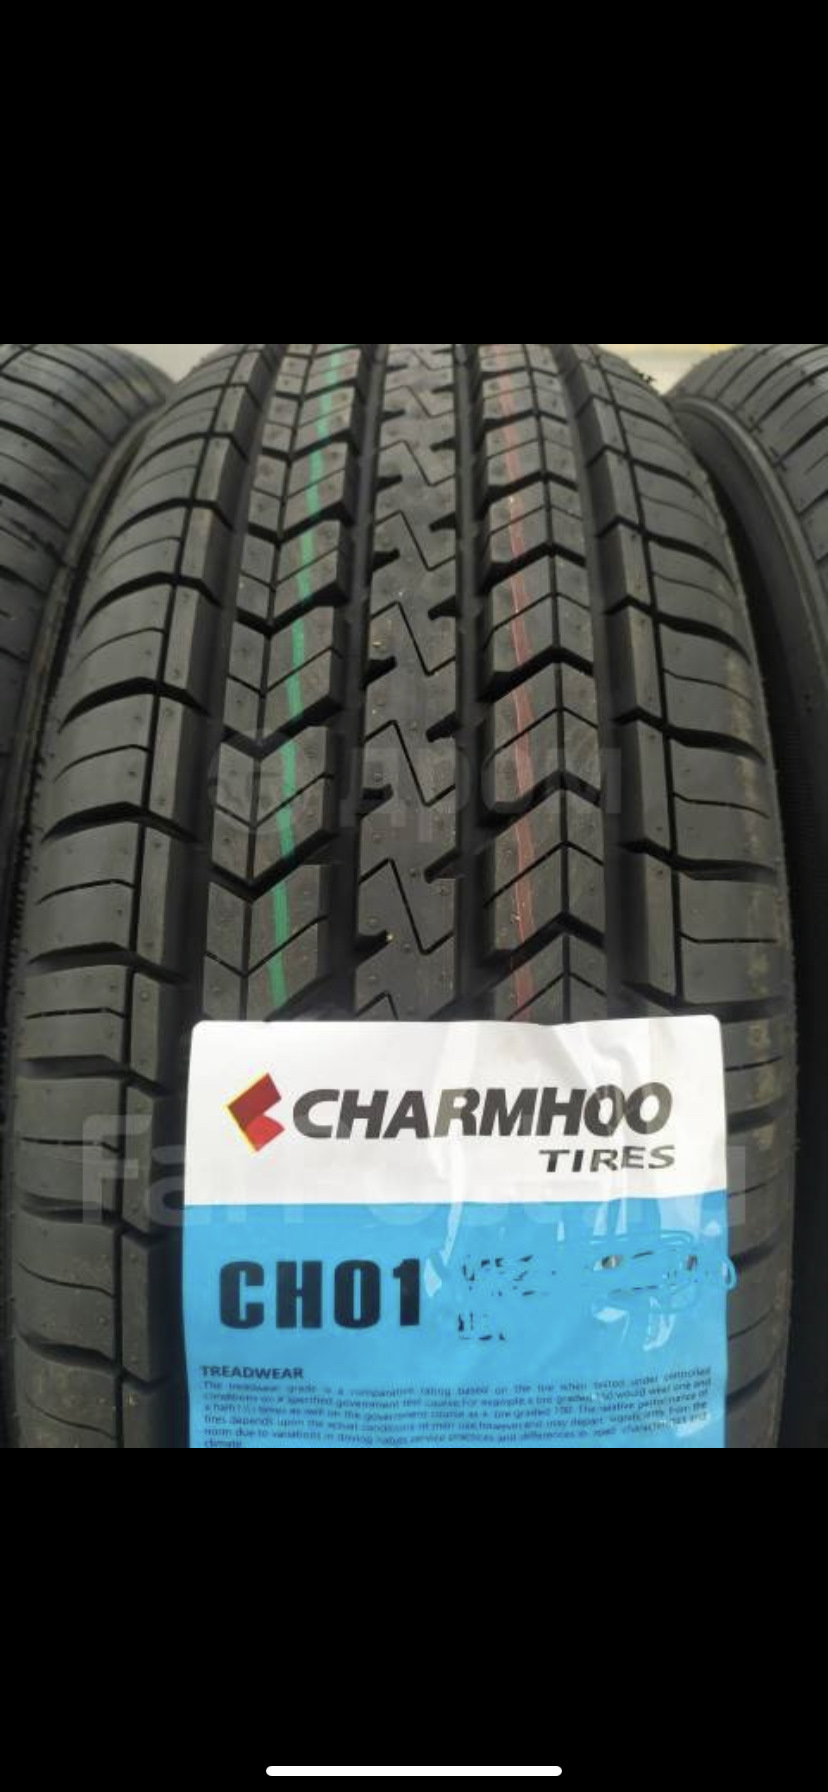 Charmhoo sport t1 отзывы. Charmhoo ch01 Touring. 205/70r15 Charmhoo 96h ch01 Touring. Charmhoo Touring ch01 225 / 45 / r17. Шины Charmhoo ch01.